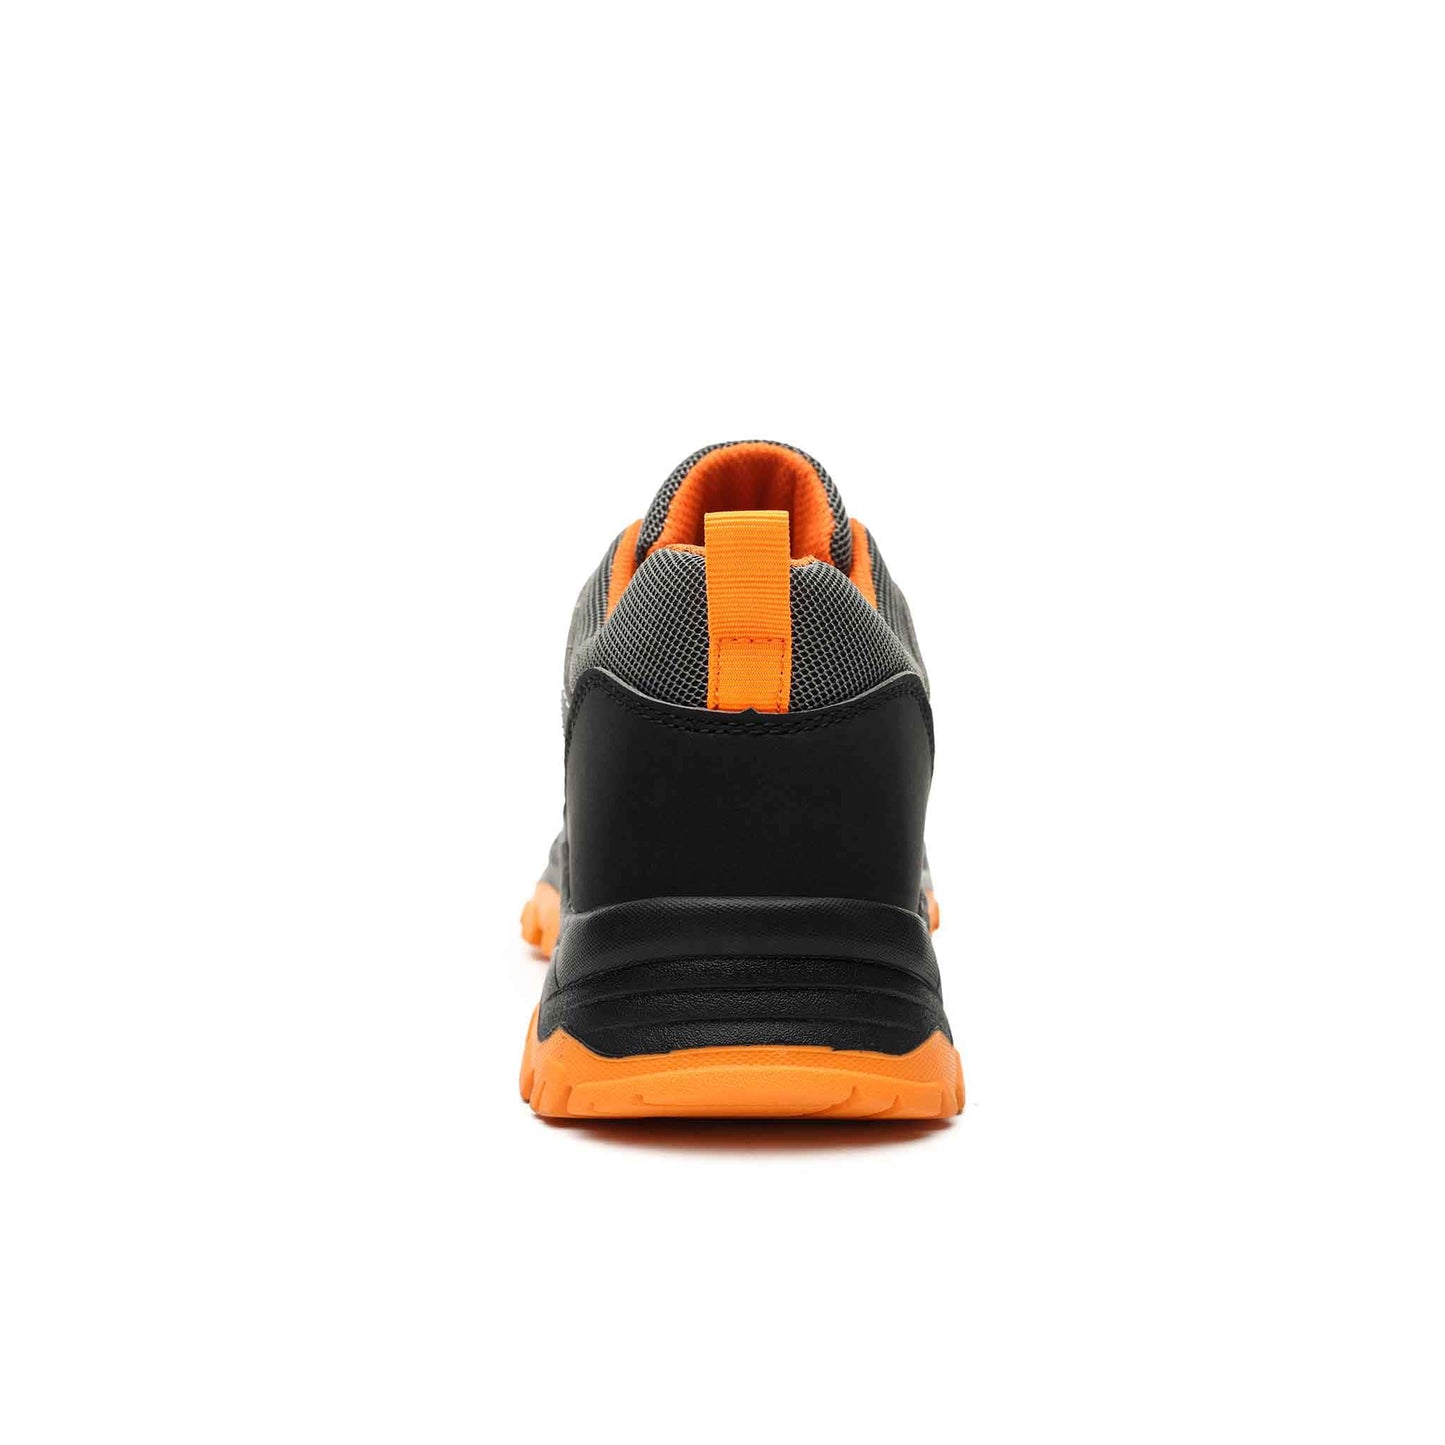 Ironfeet Benk - Chaussures de sécurité ultra résistantes